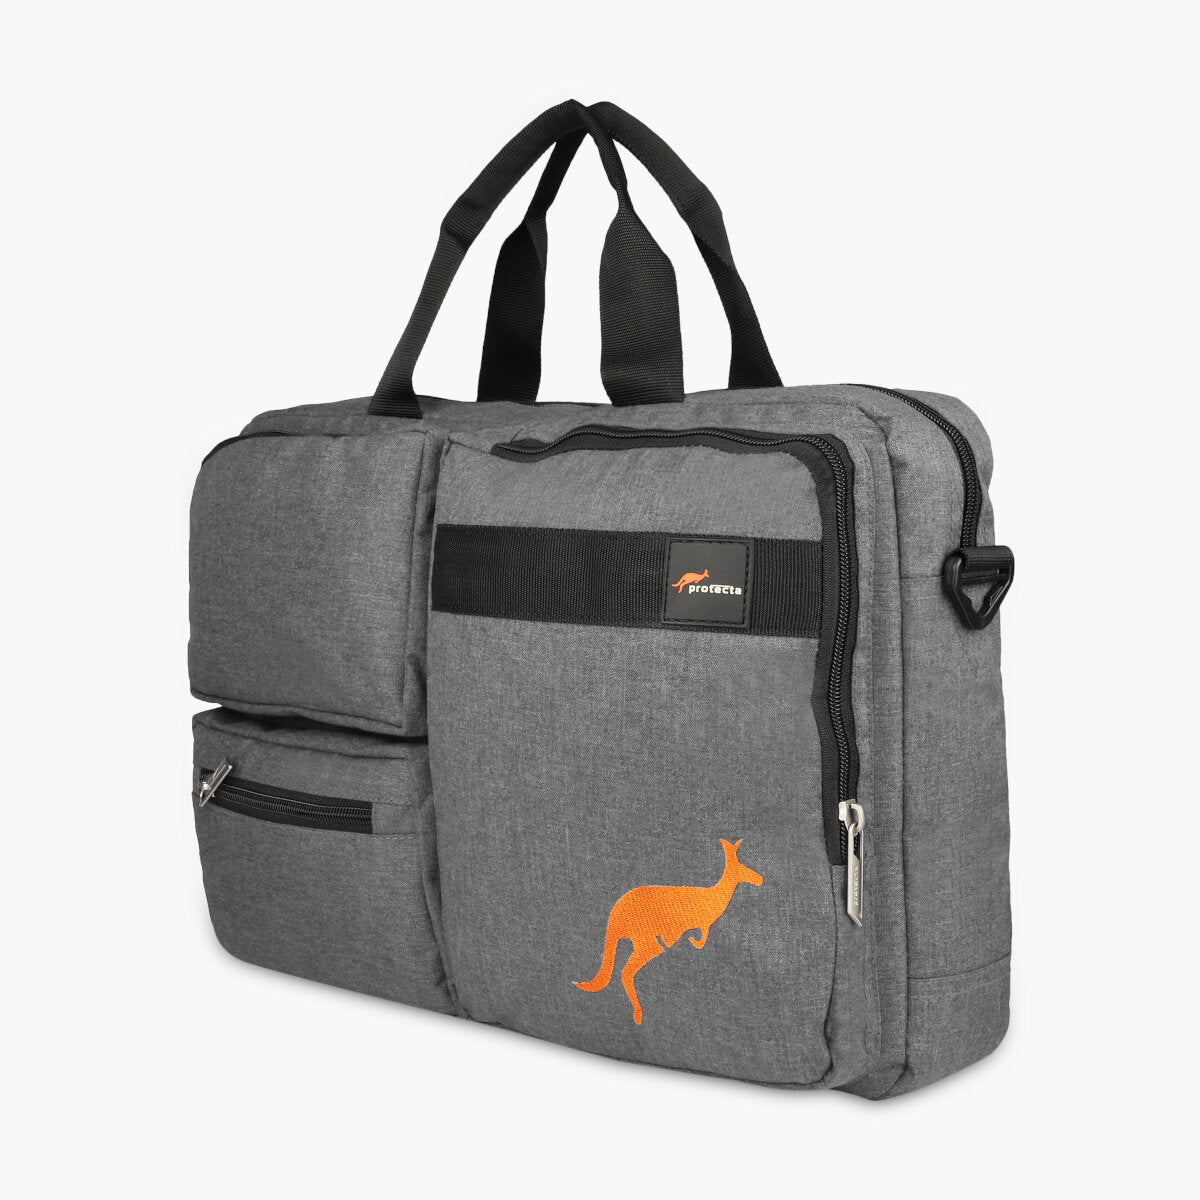 Stone Grey, Protecta Leap Laptop Office Bag-2